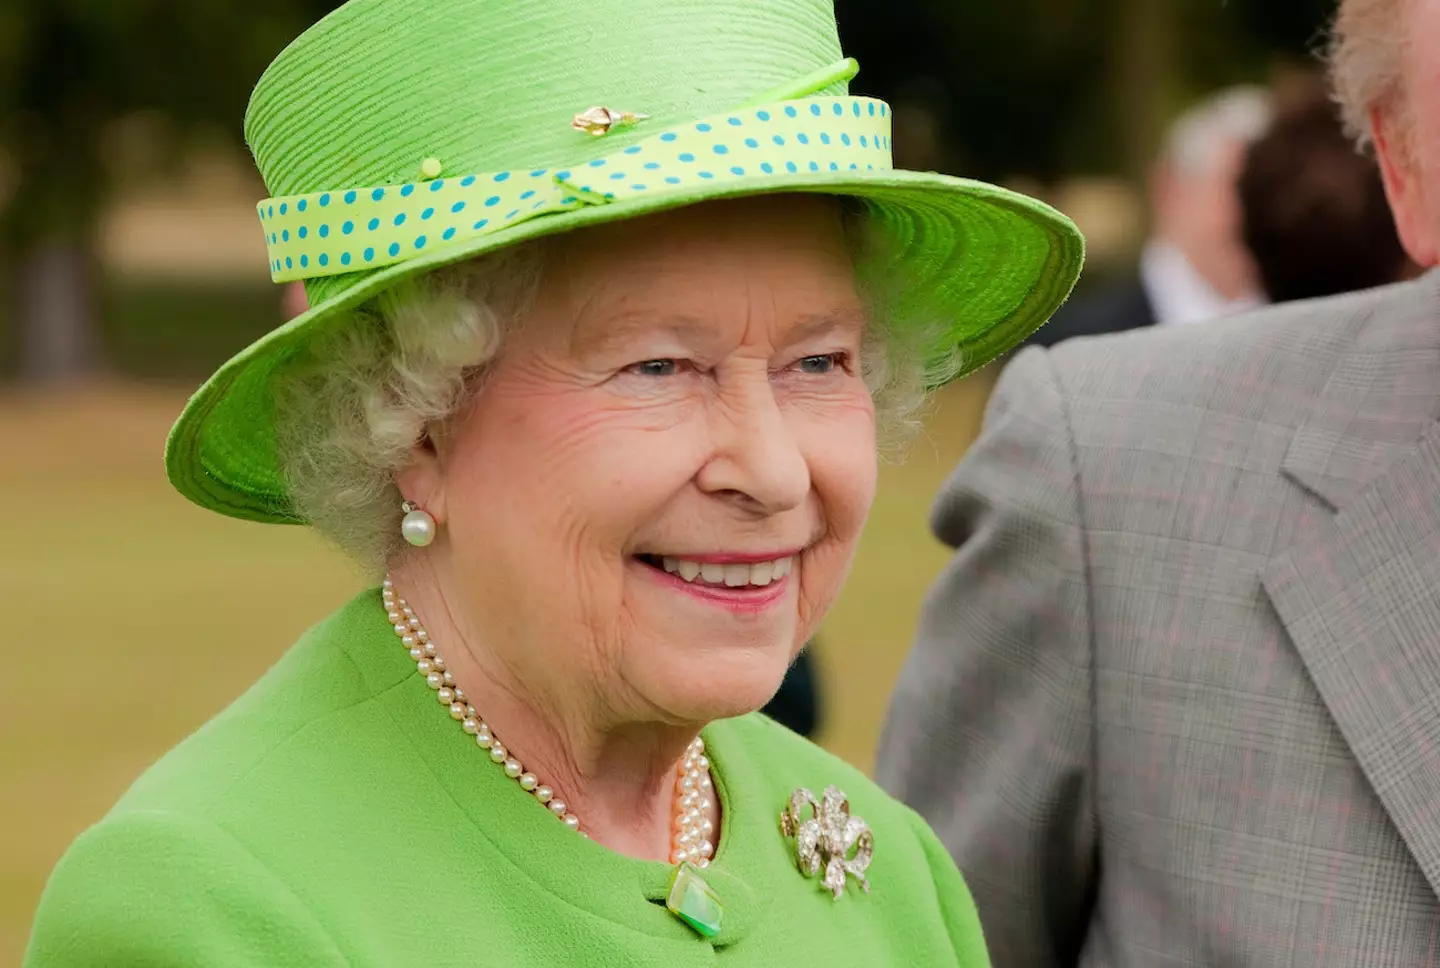 Her Majesty Queen Elizabeth II pictured in 2009.